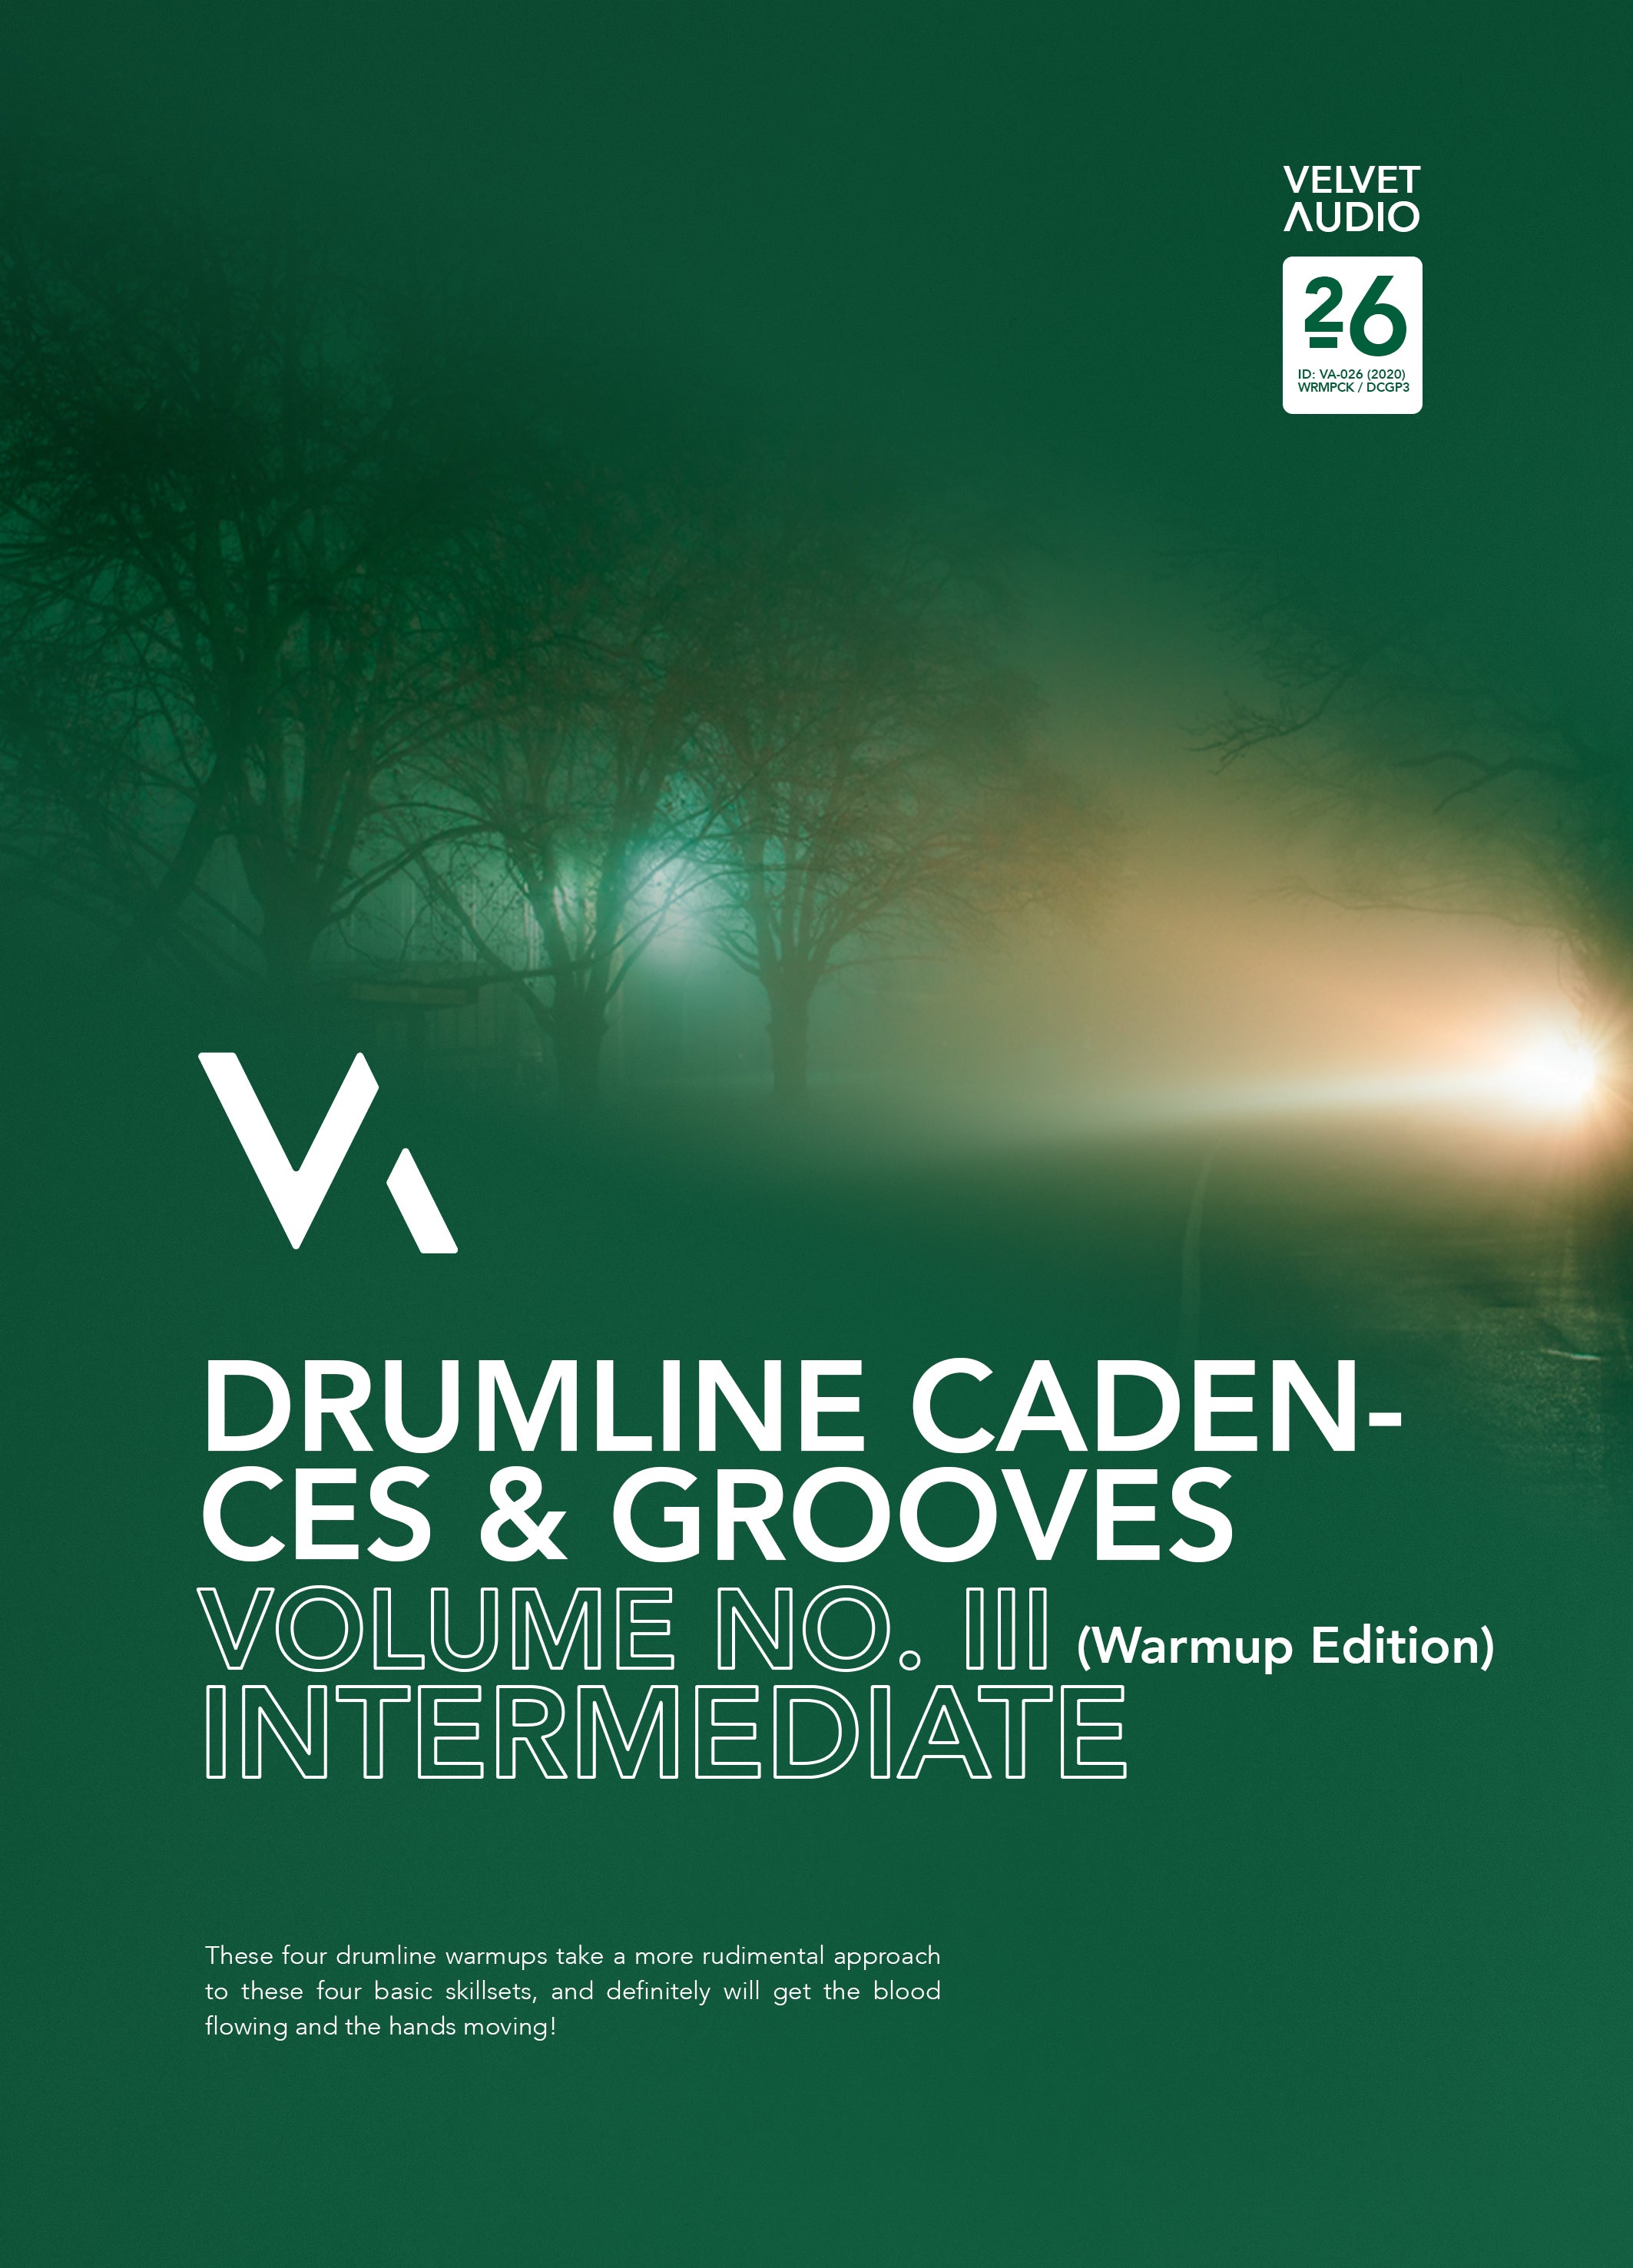 Drumline Cadences & Grooves Pack, Vol. III (Warmup Edition)